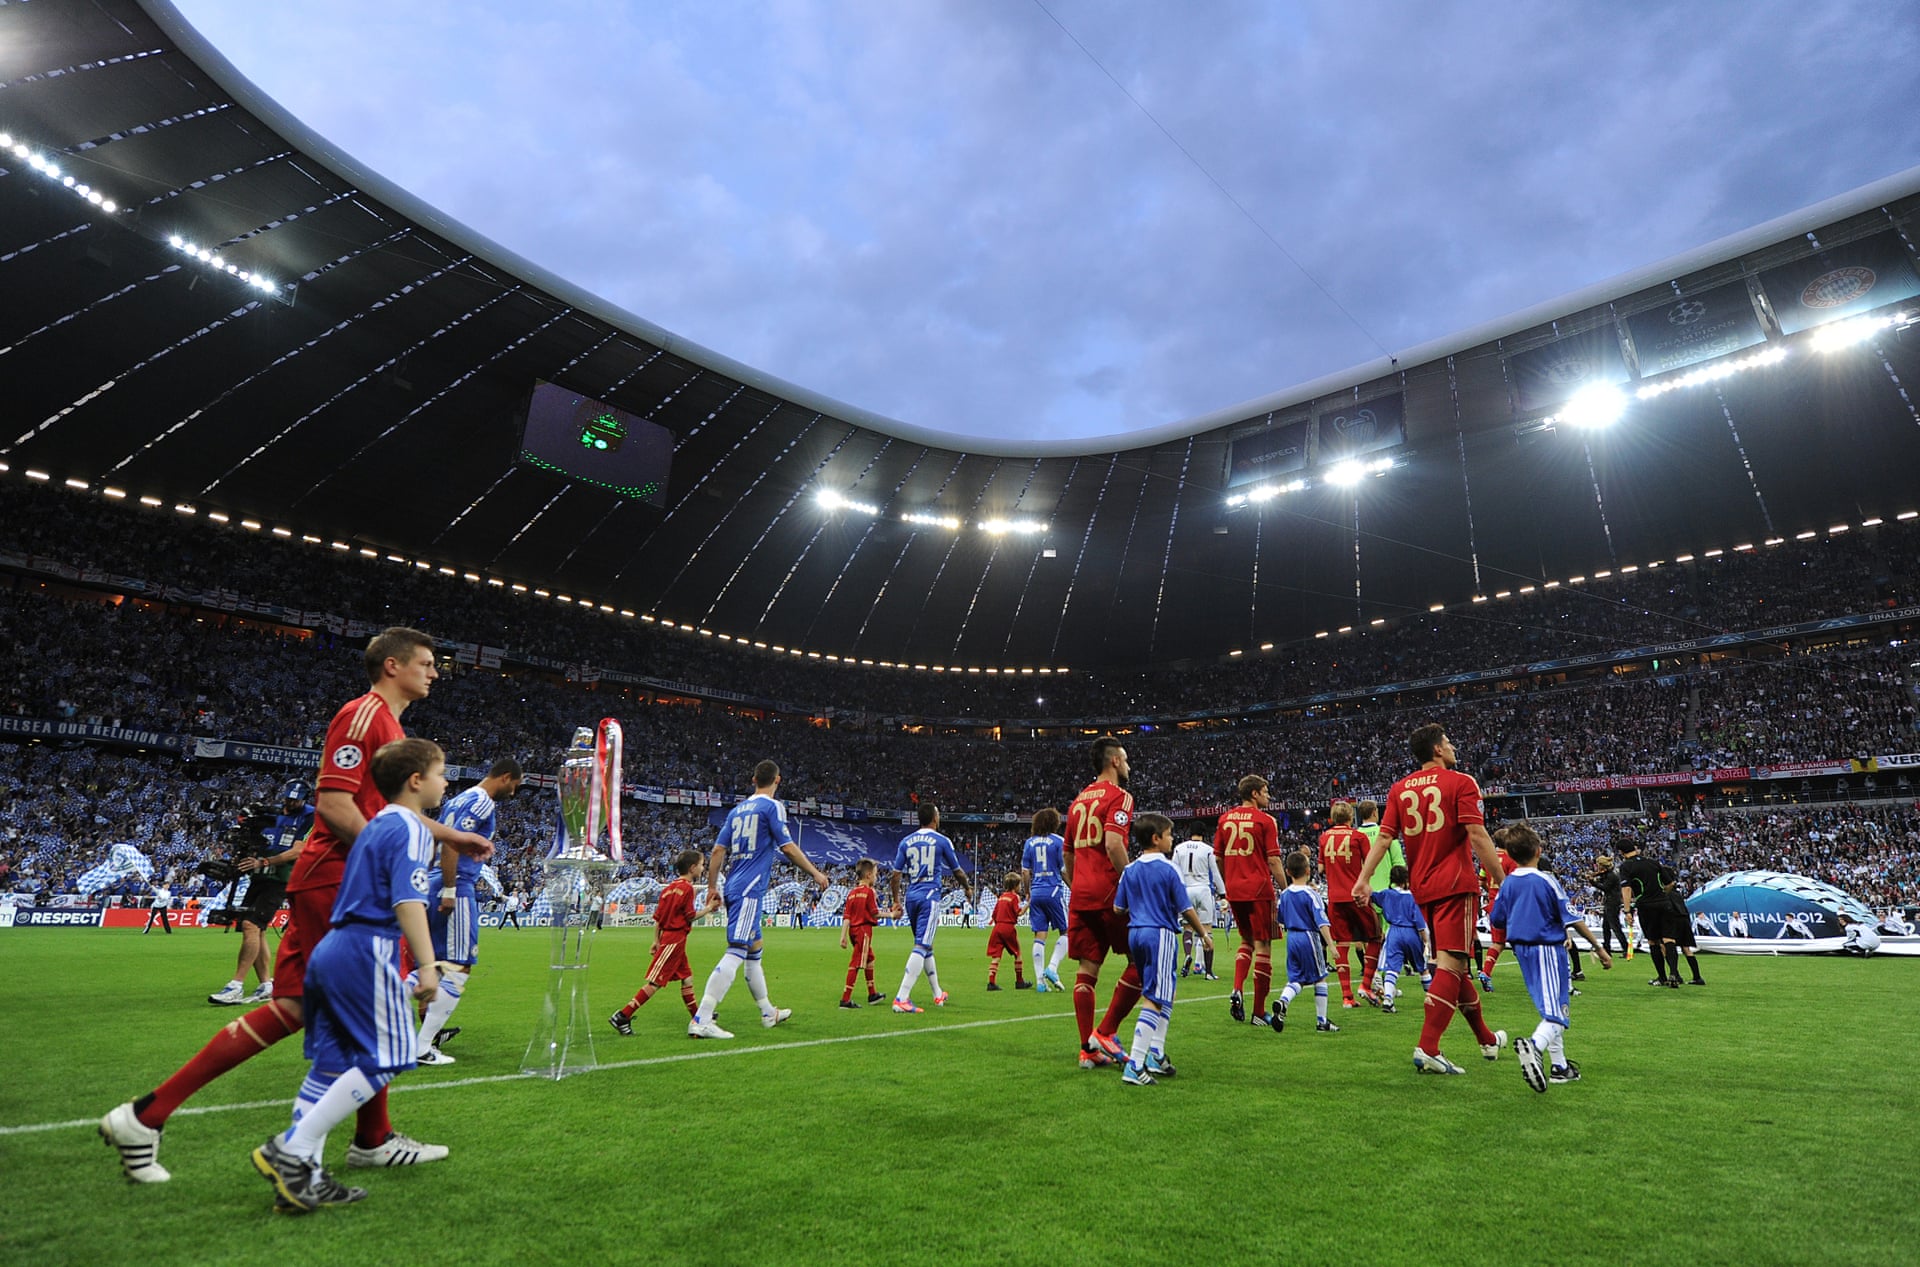 6Chelsea vs Bayern Munich 2012: Hoi uc kho quen1